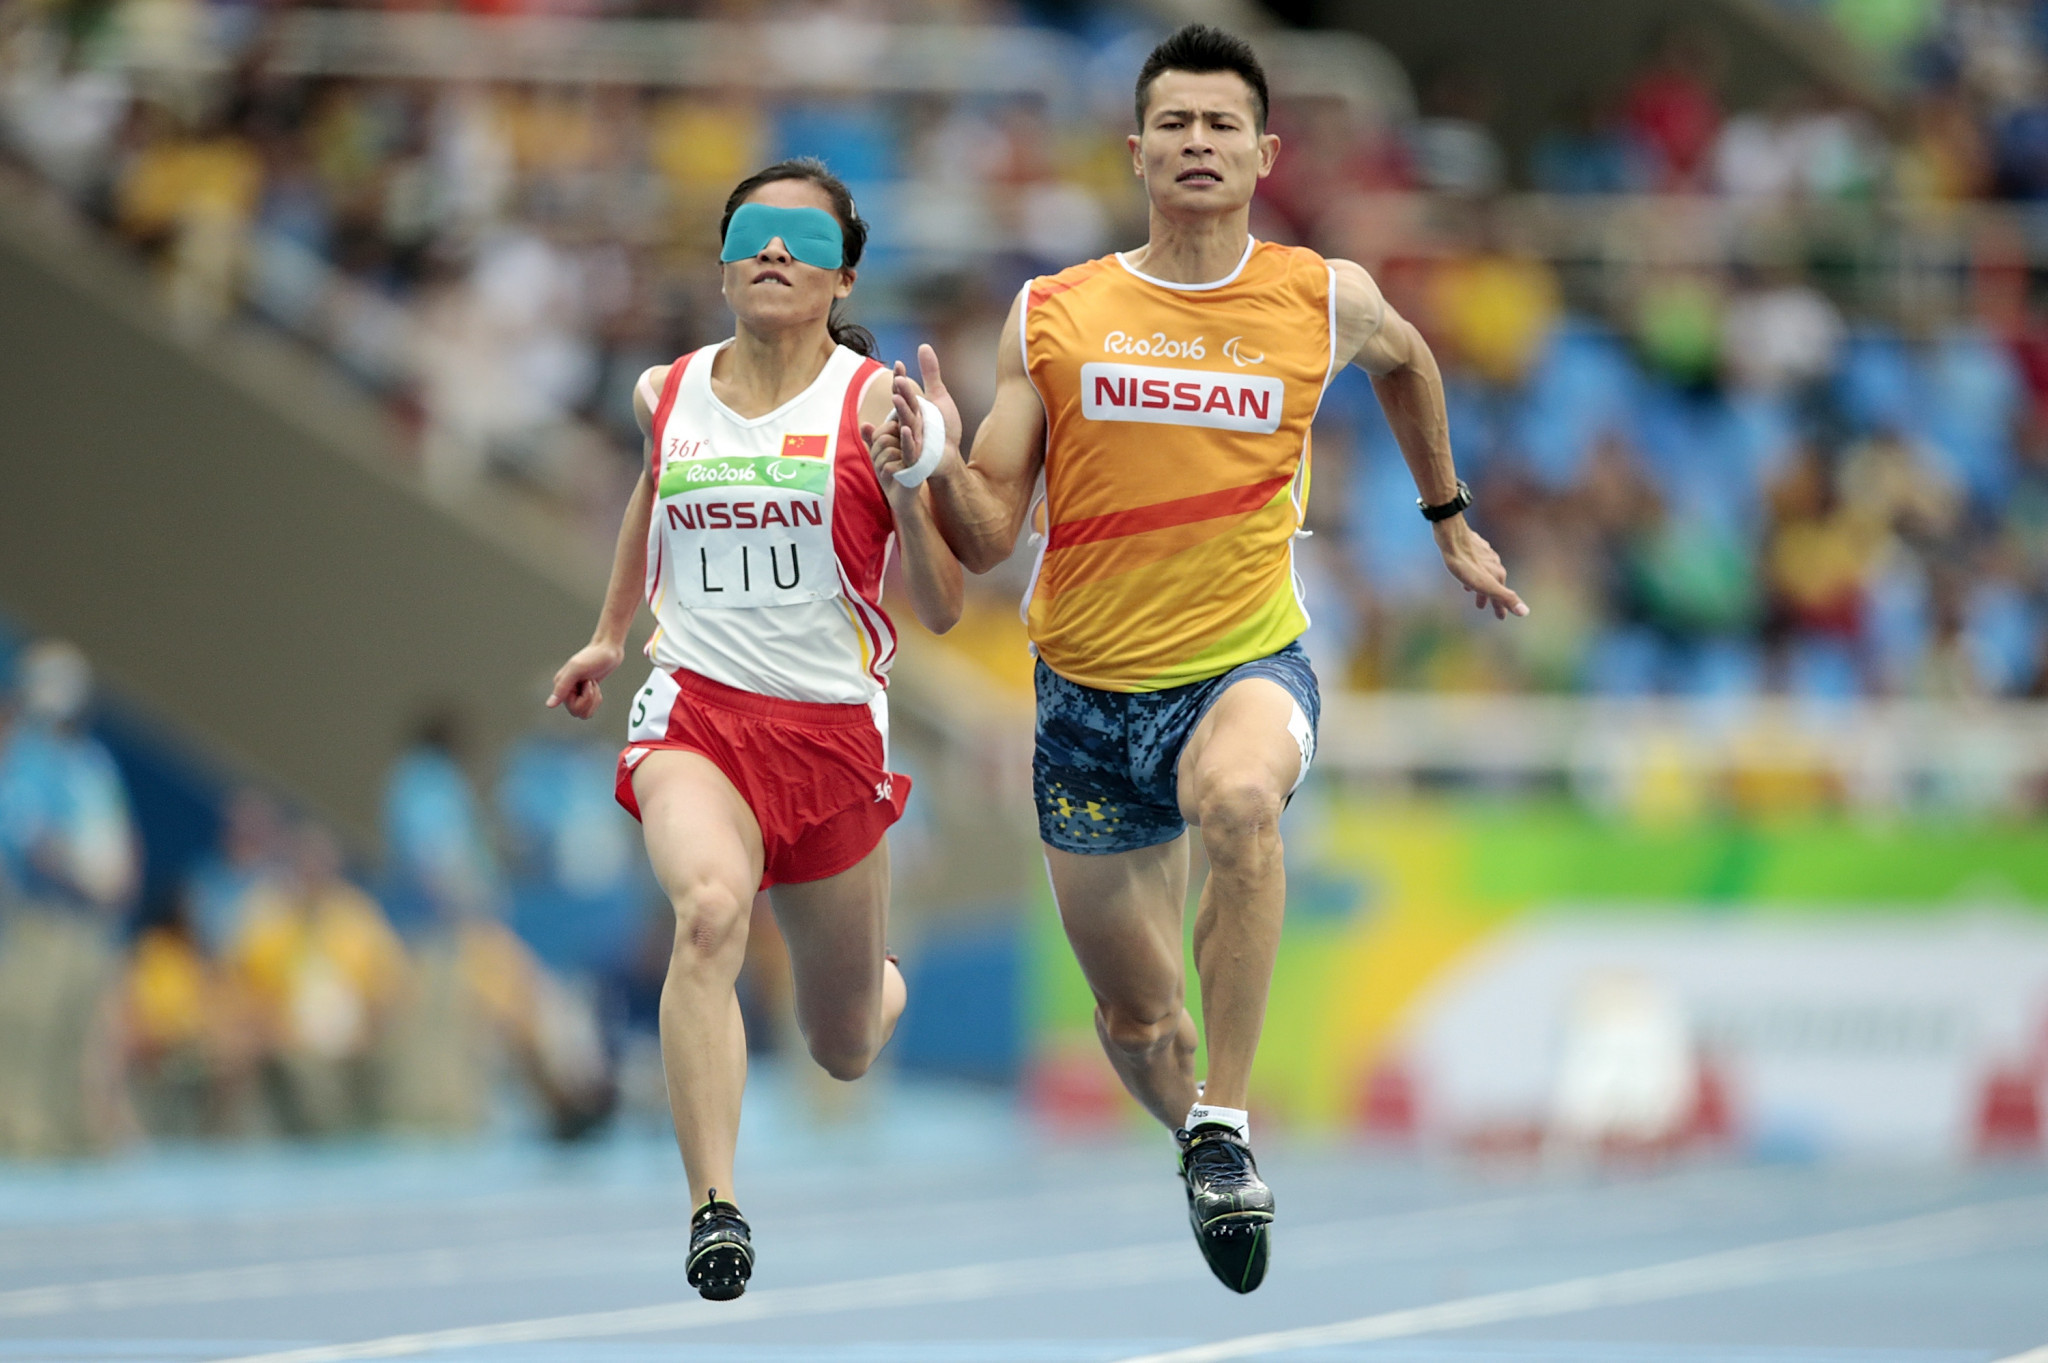 Paralympic champion Liu breaks world record on final day of World Para Athletics Grand Prix